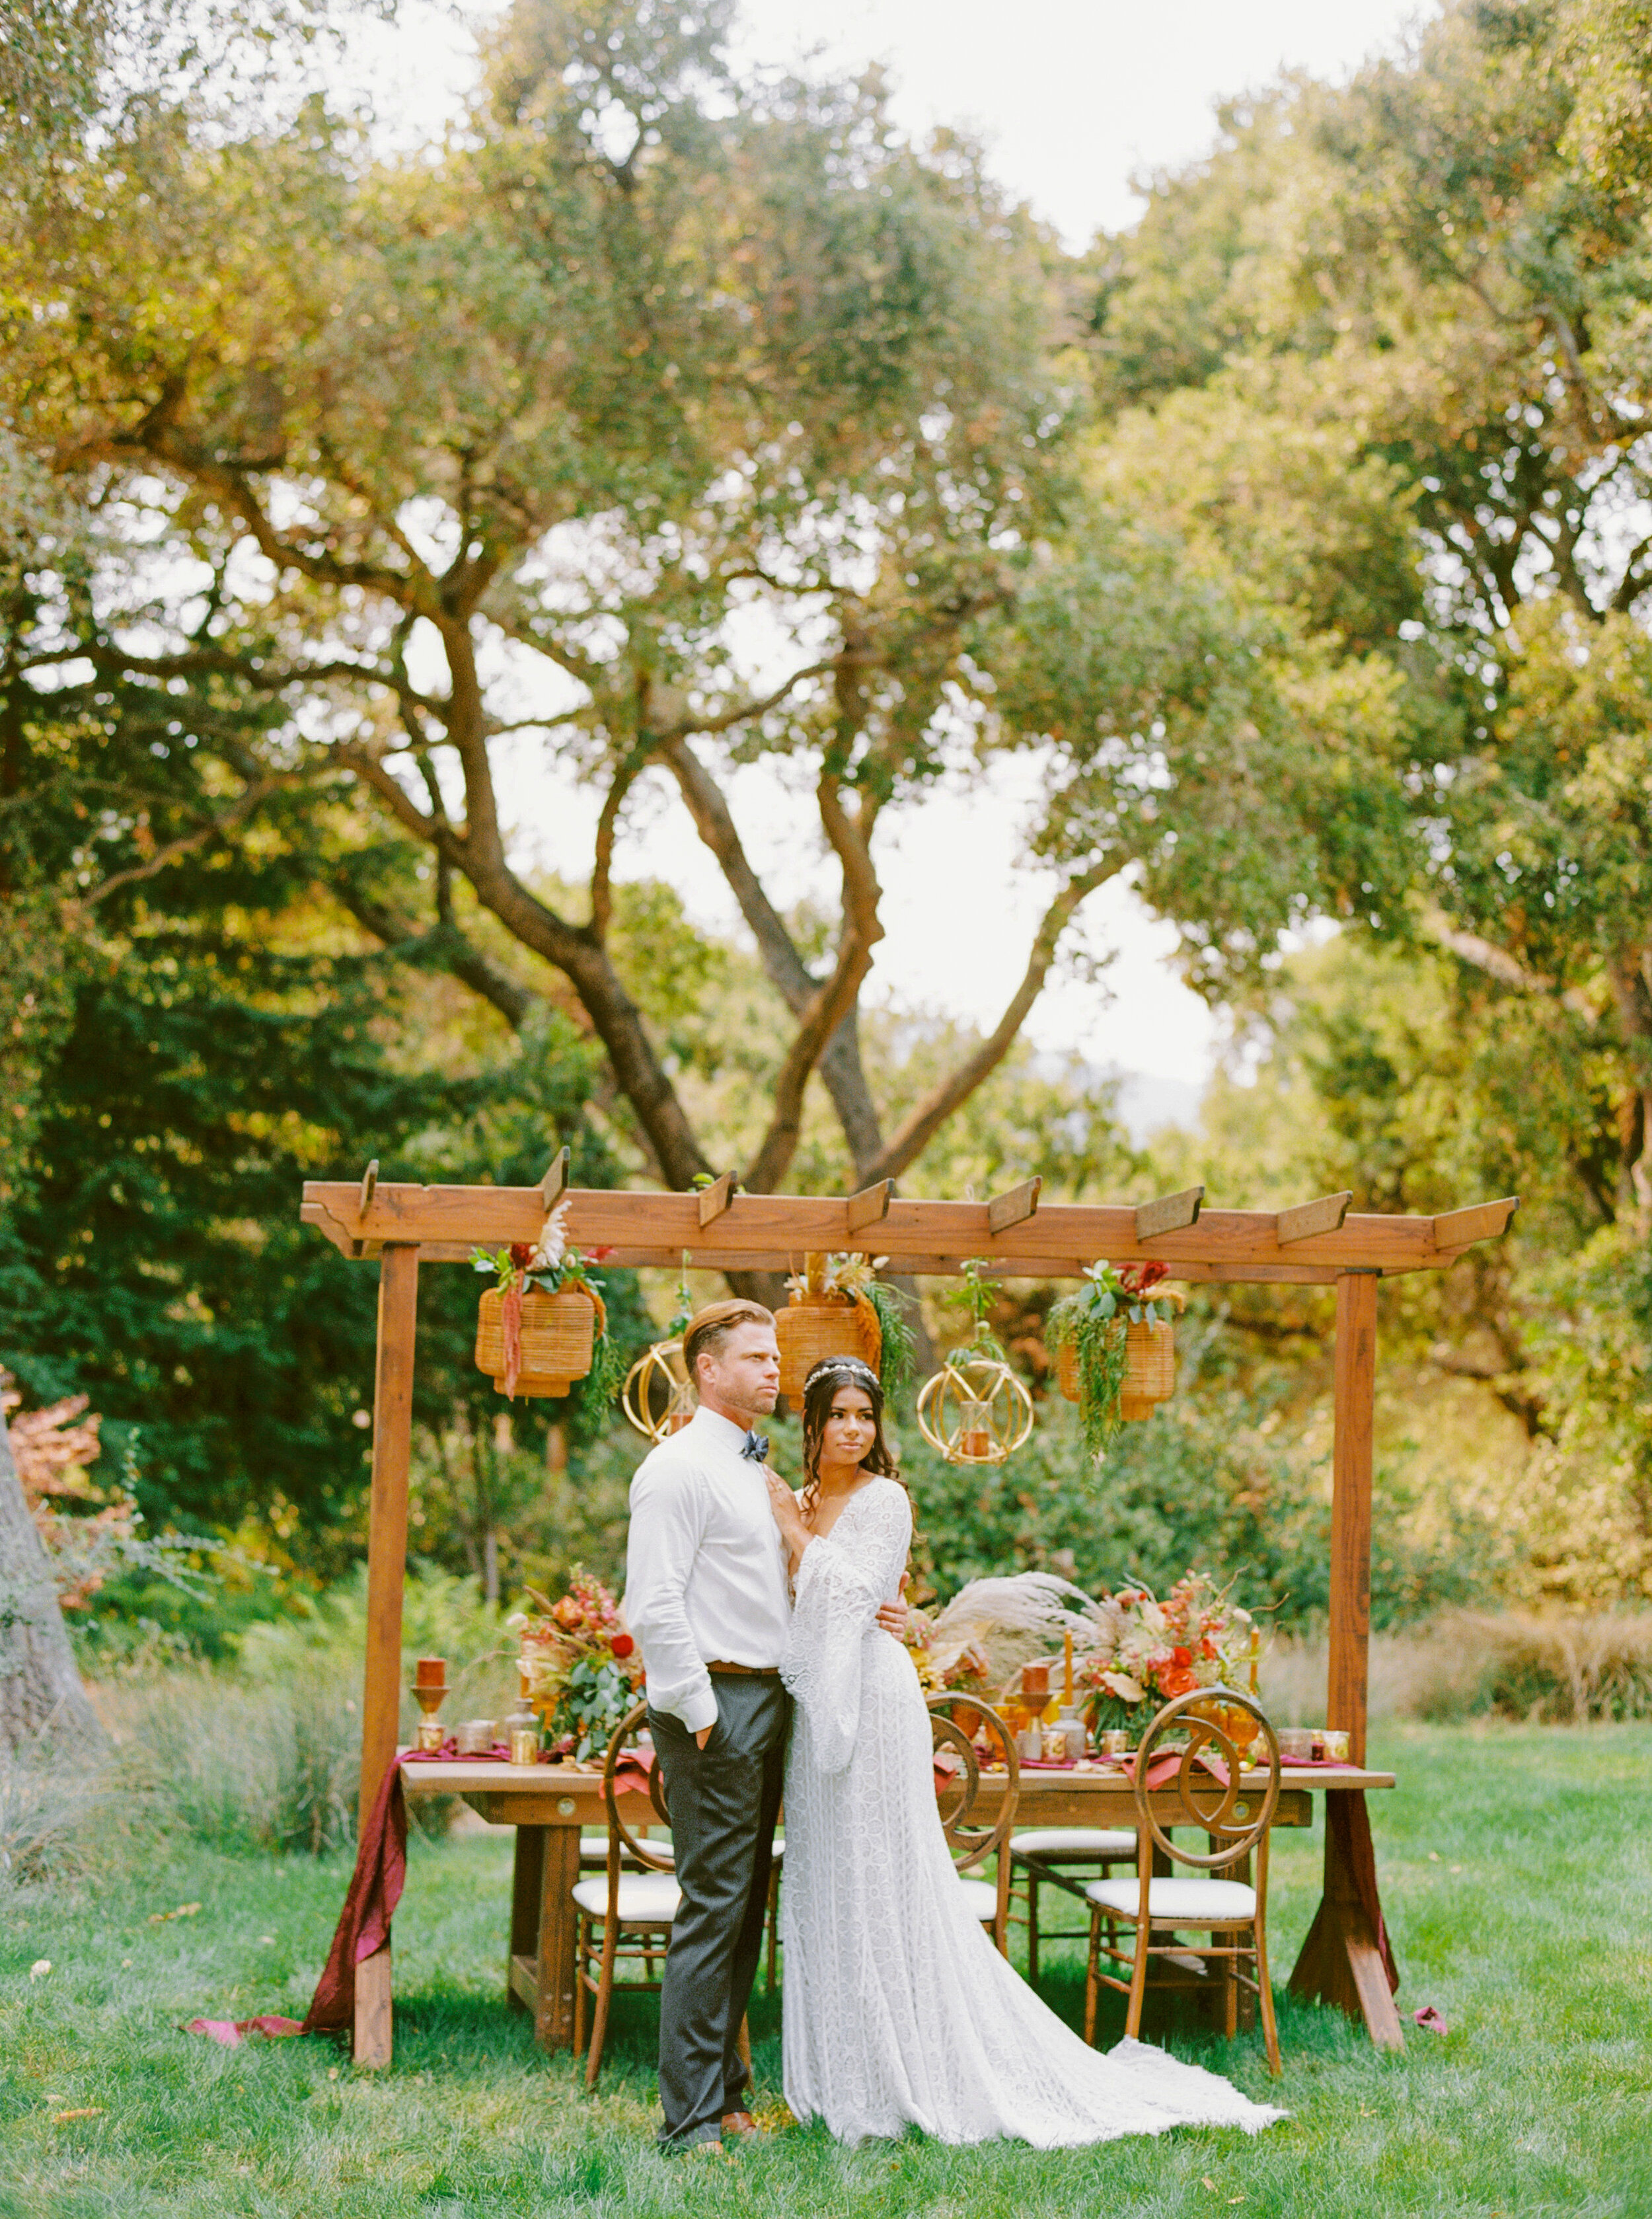 Sarahi Hadden - An Earthy Summer Boho Inspired Wedding with Sunset Hues at Gardener Ranch-69.jpg